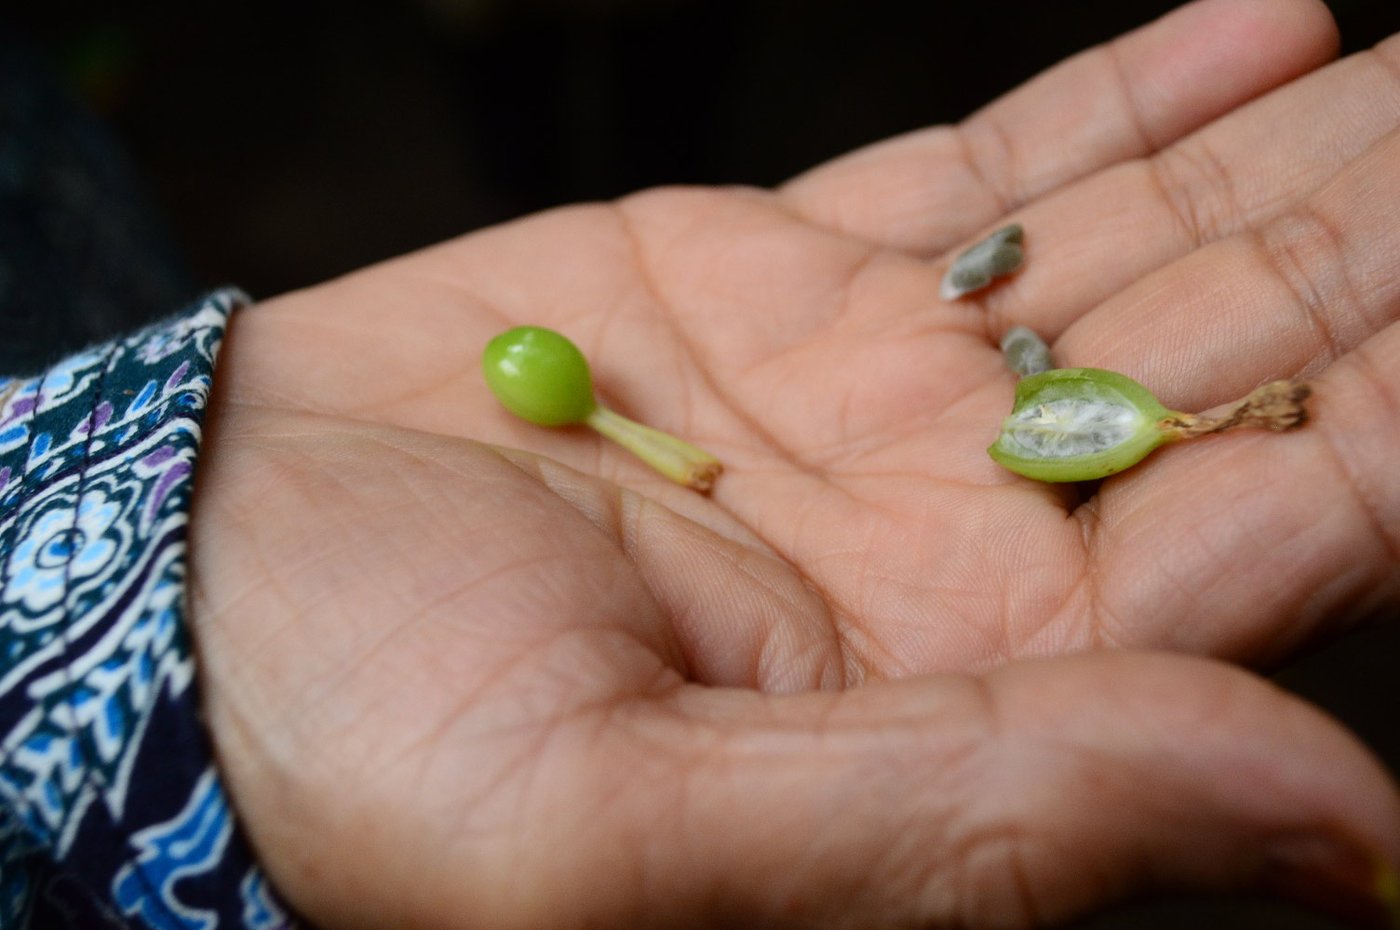 Herb seeds on hand